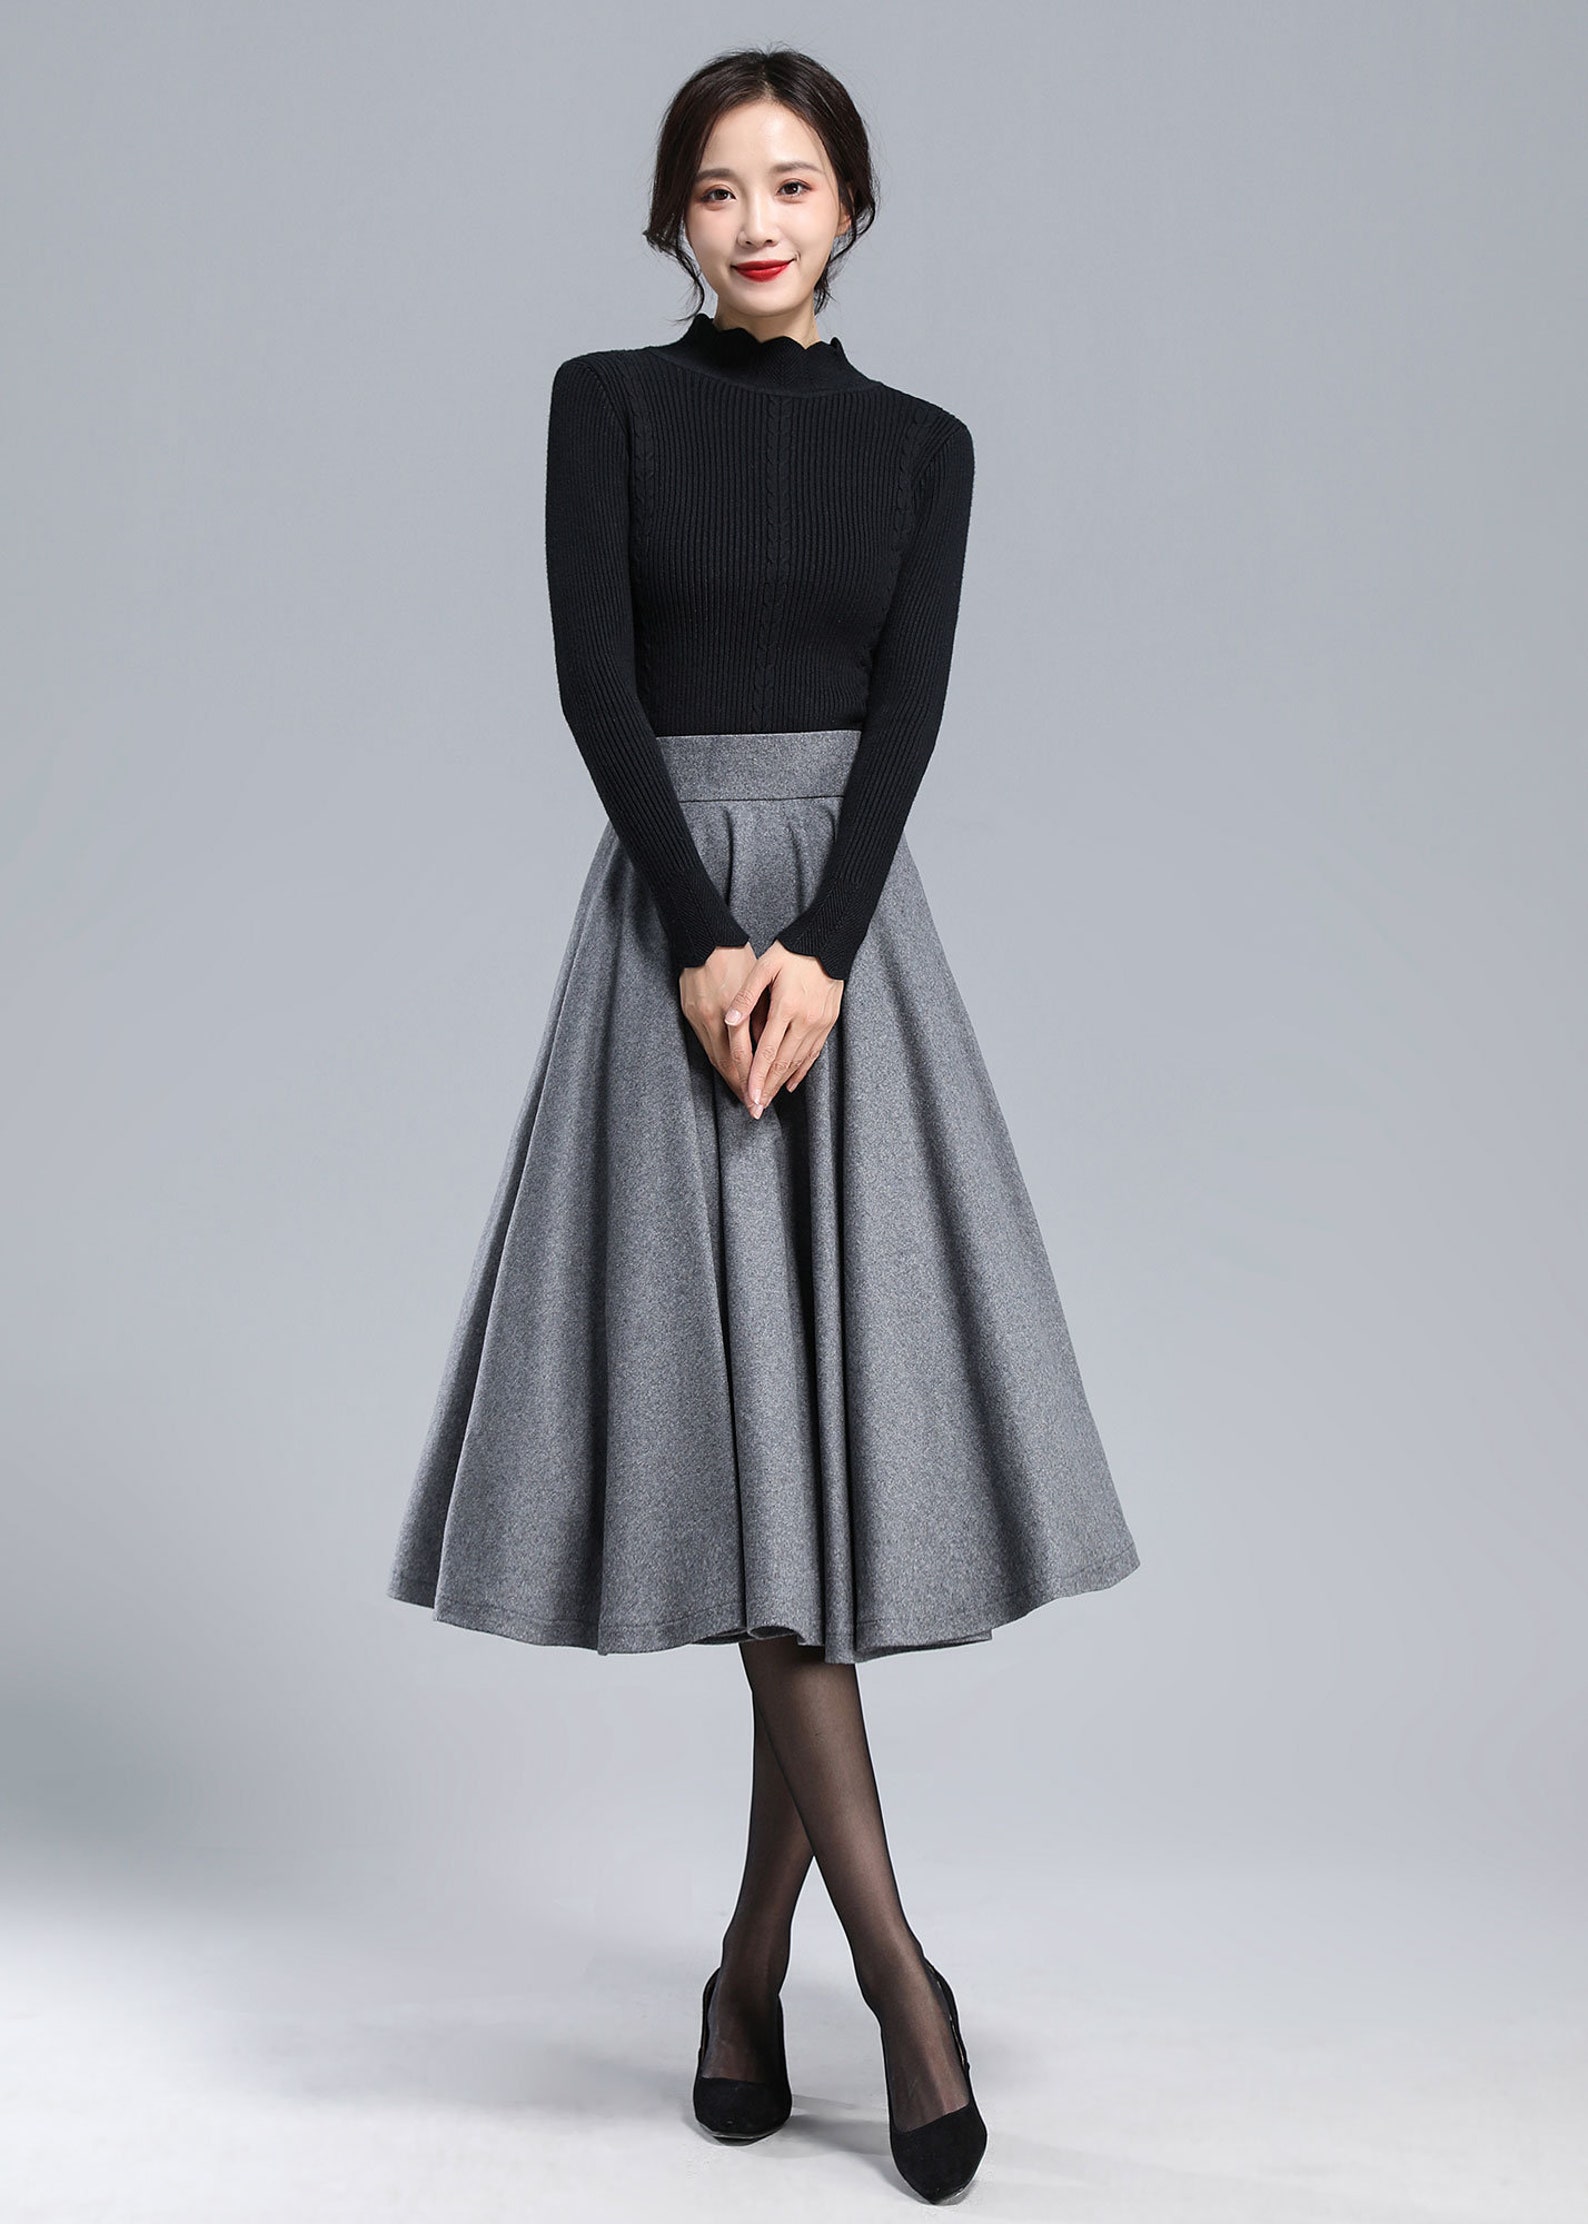 Gray Wool Skirt Wool Circle Skirt Wool Midi Skirt Women - Etsy